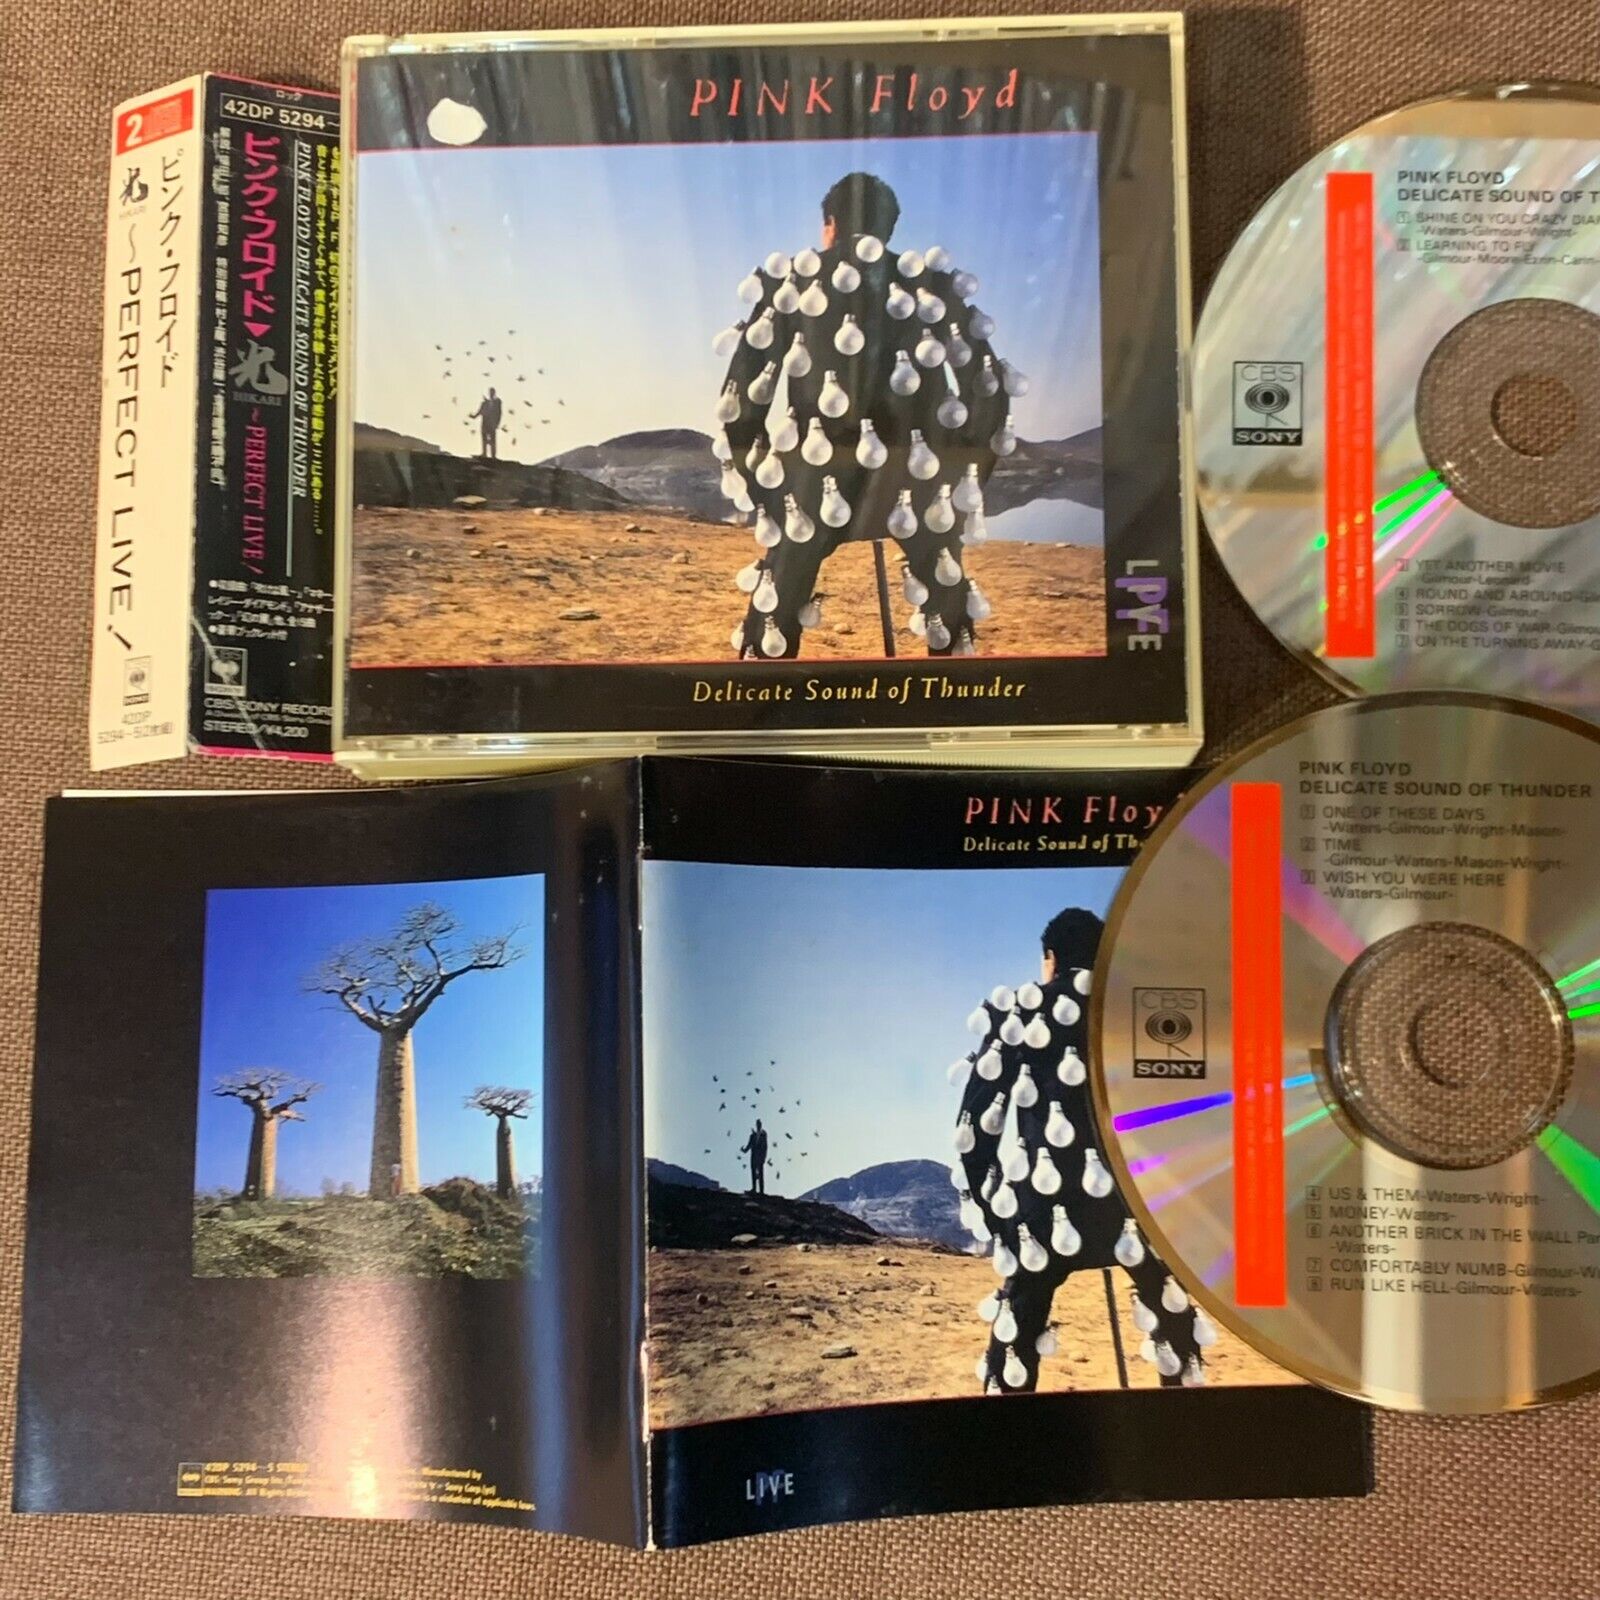 Promo PINK FLOYD Delicate Sound of Thunder JAPAN 2CD 42DP5294~5 OBI-parts 4,200y